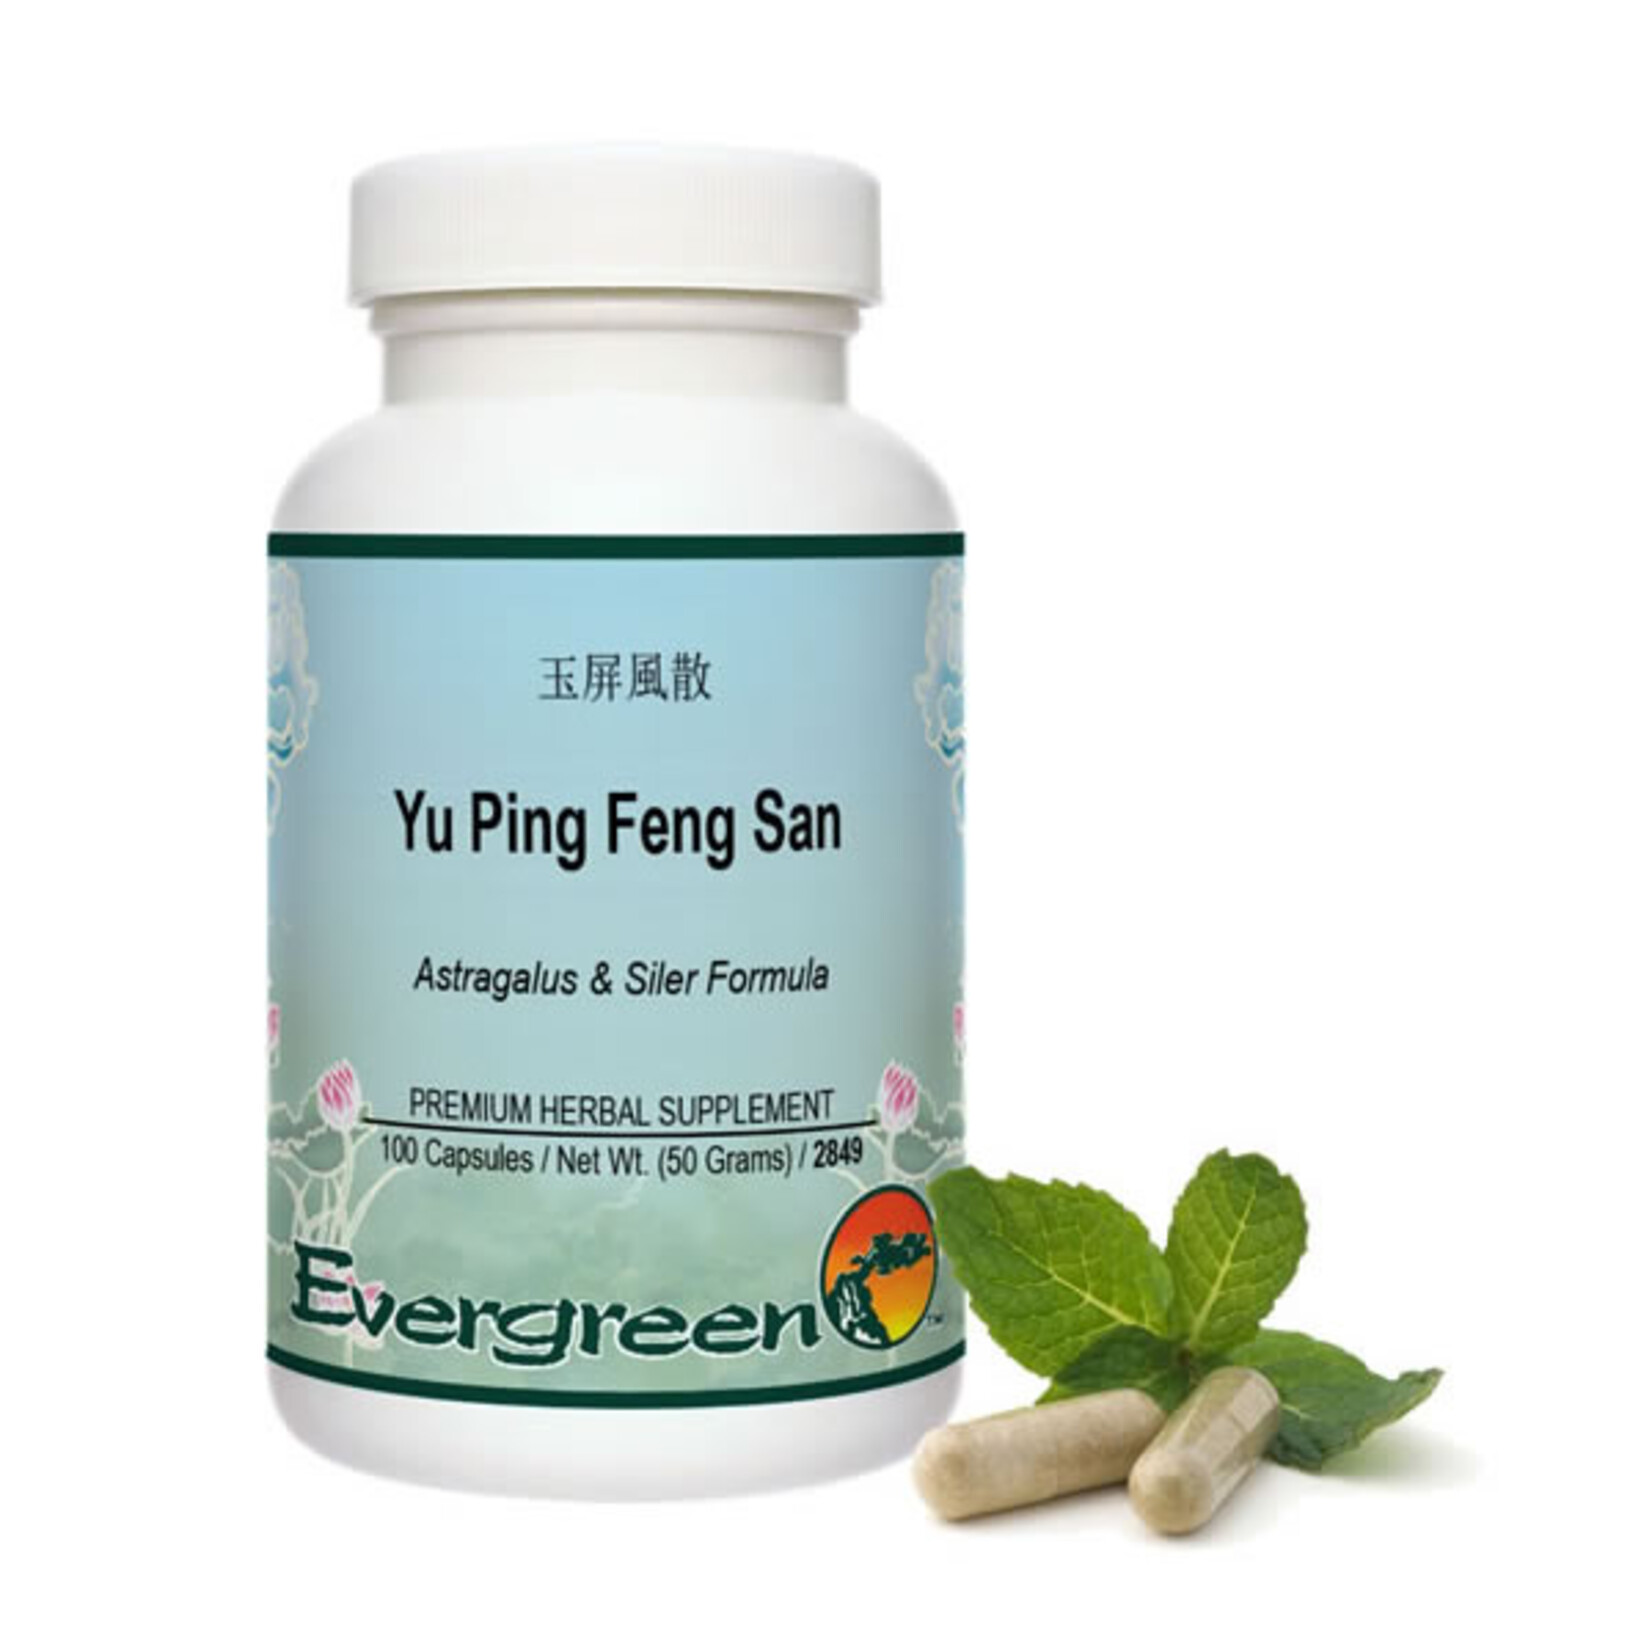 Yu Ping Feng San (Evergreen Herbs)